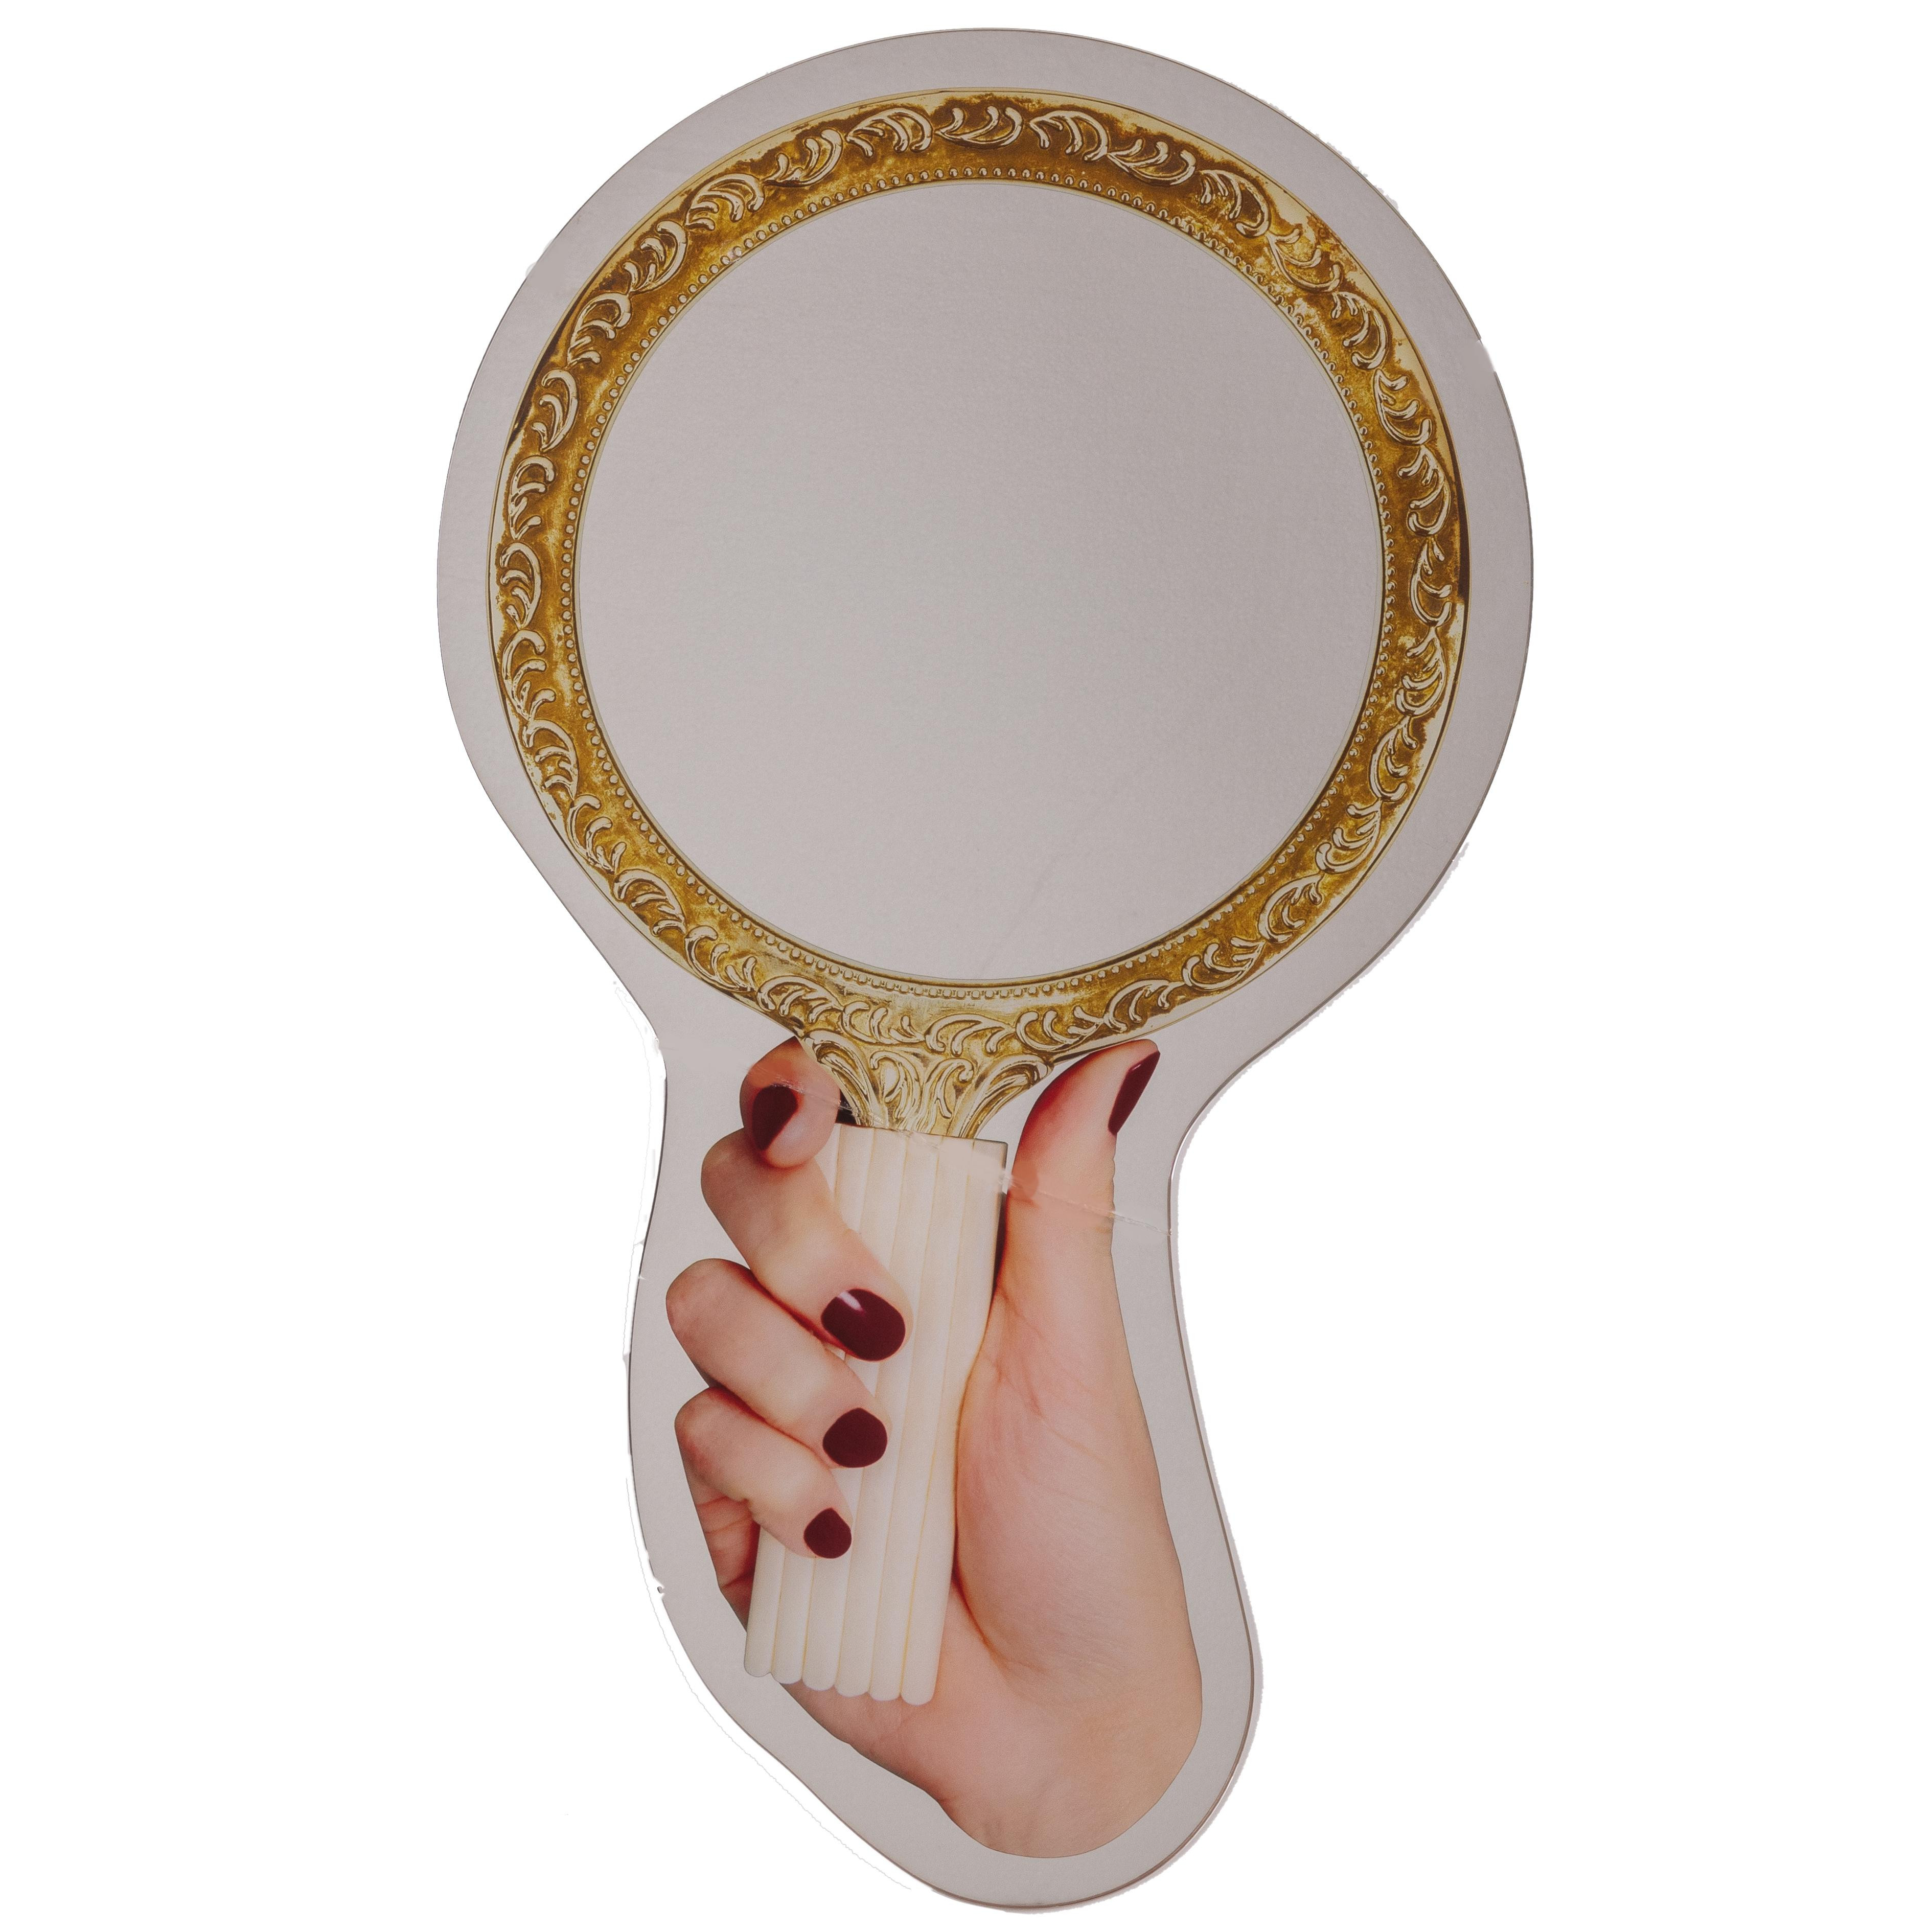 Rusteloosheid Scully schuif Seletti Vanity spiegel handspiegel | Flinders